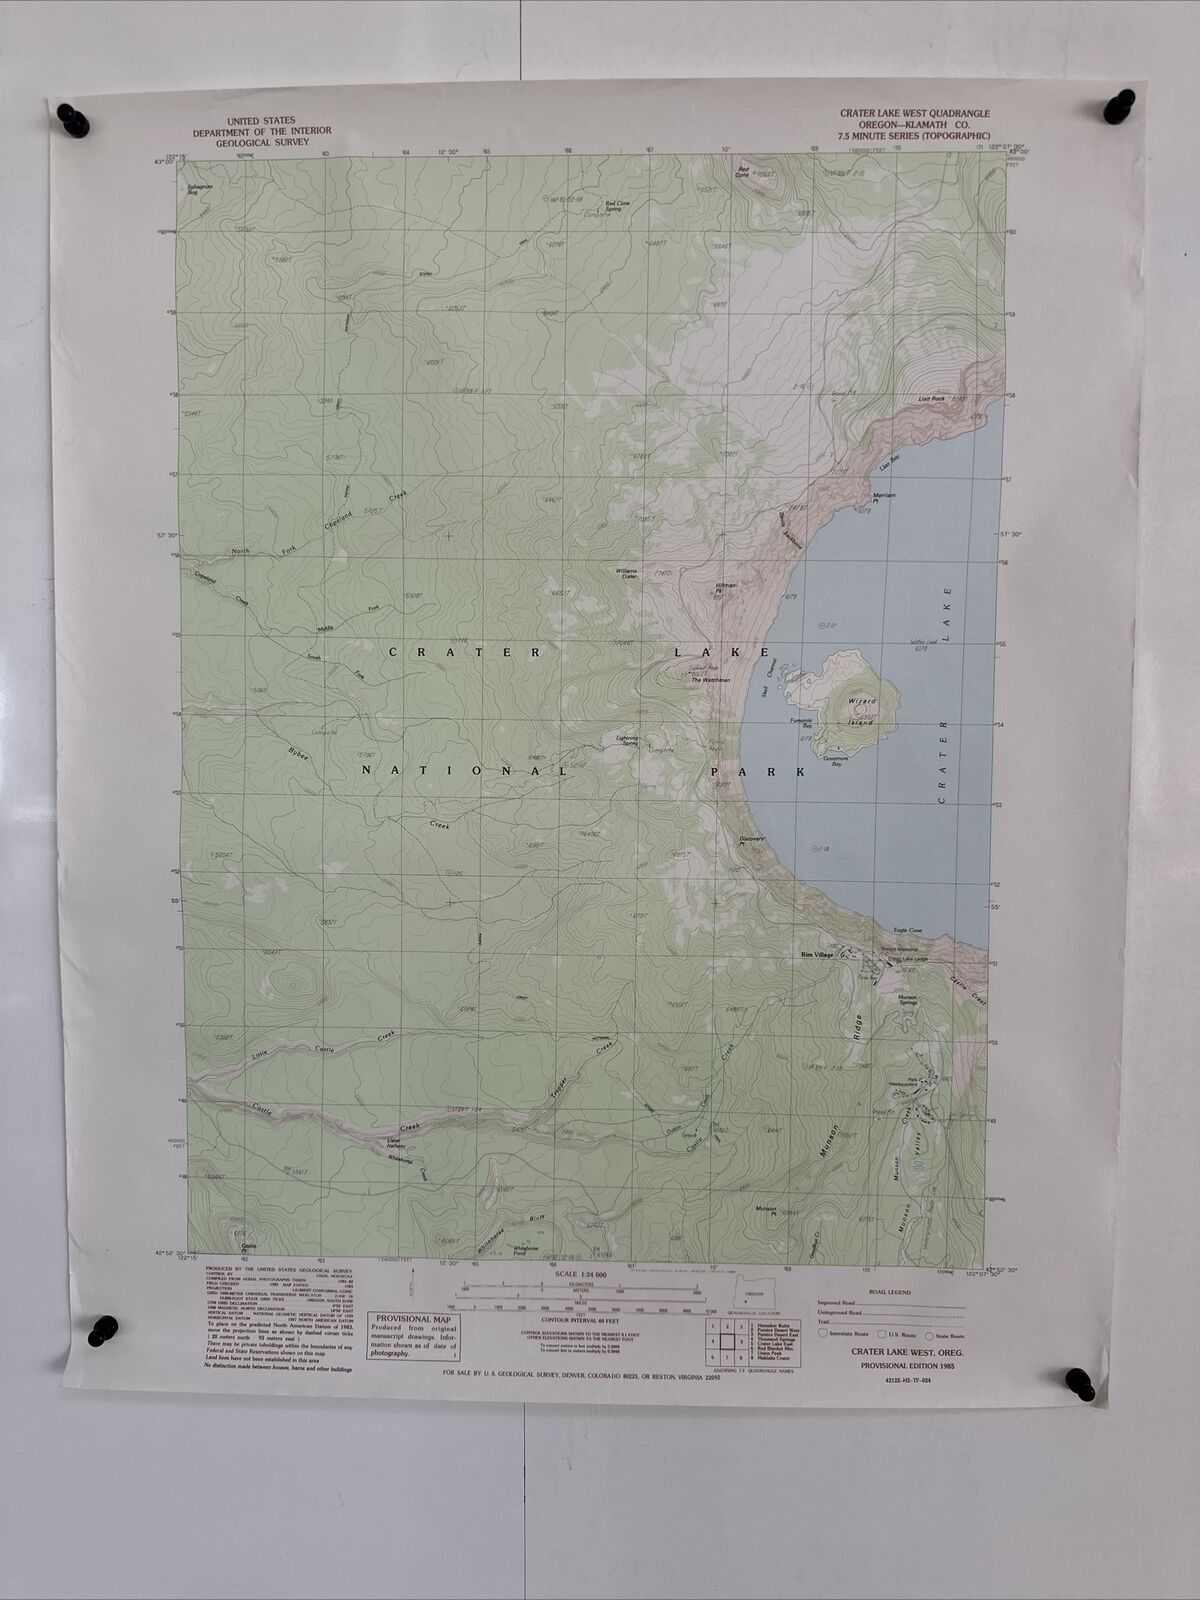 Crater Lake West Quadrant : Oregon Topo Map 7.5 Min Vintage 1985 Wizard Island